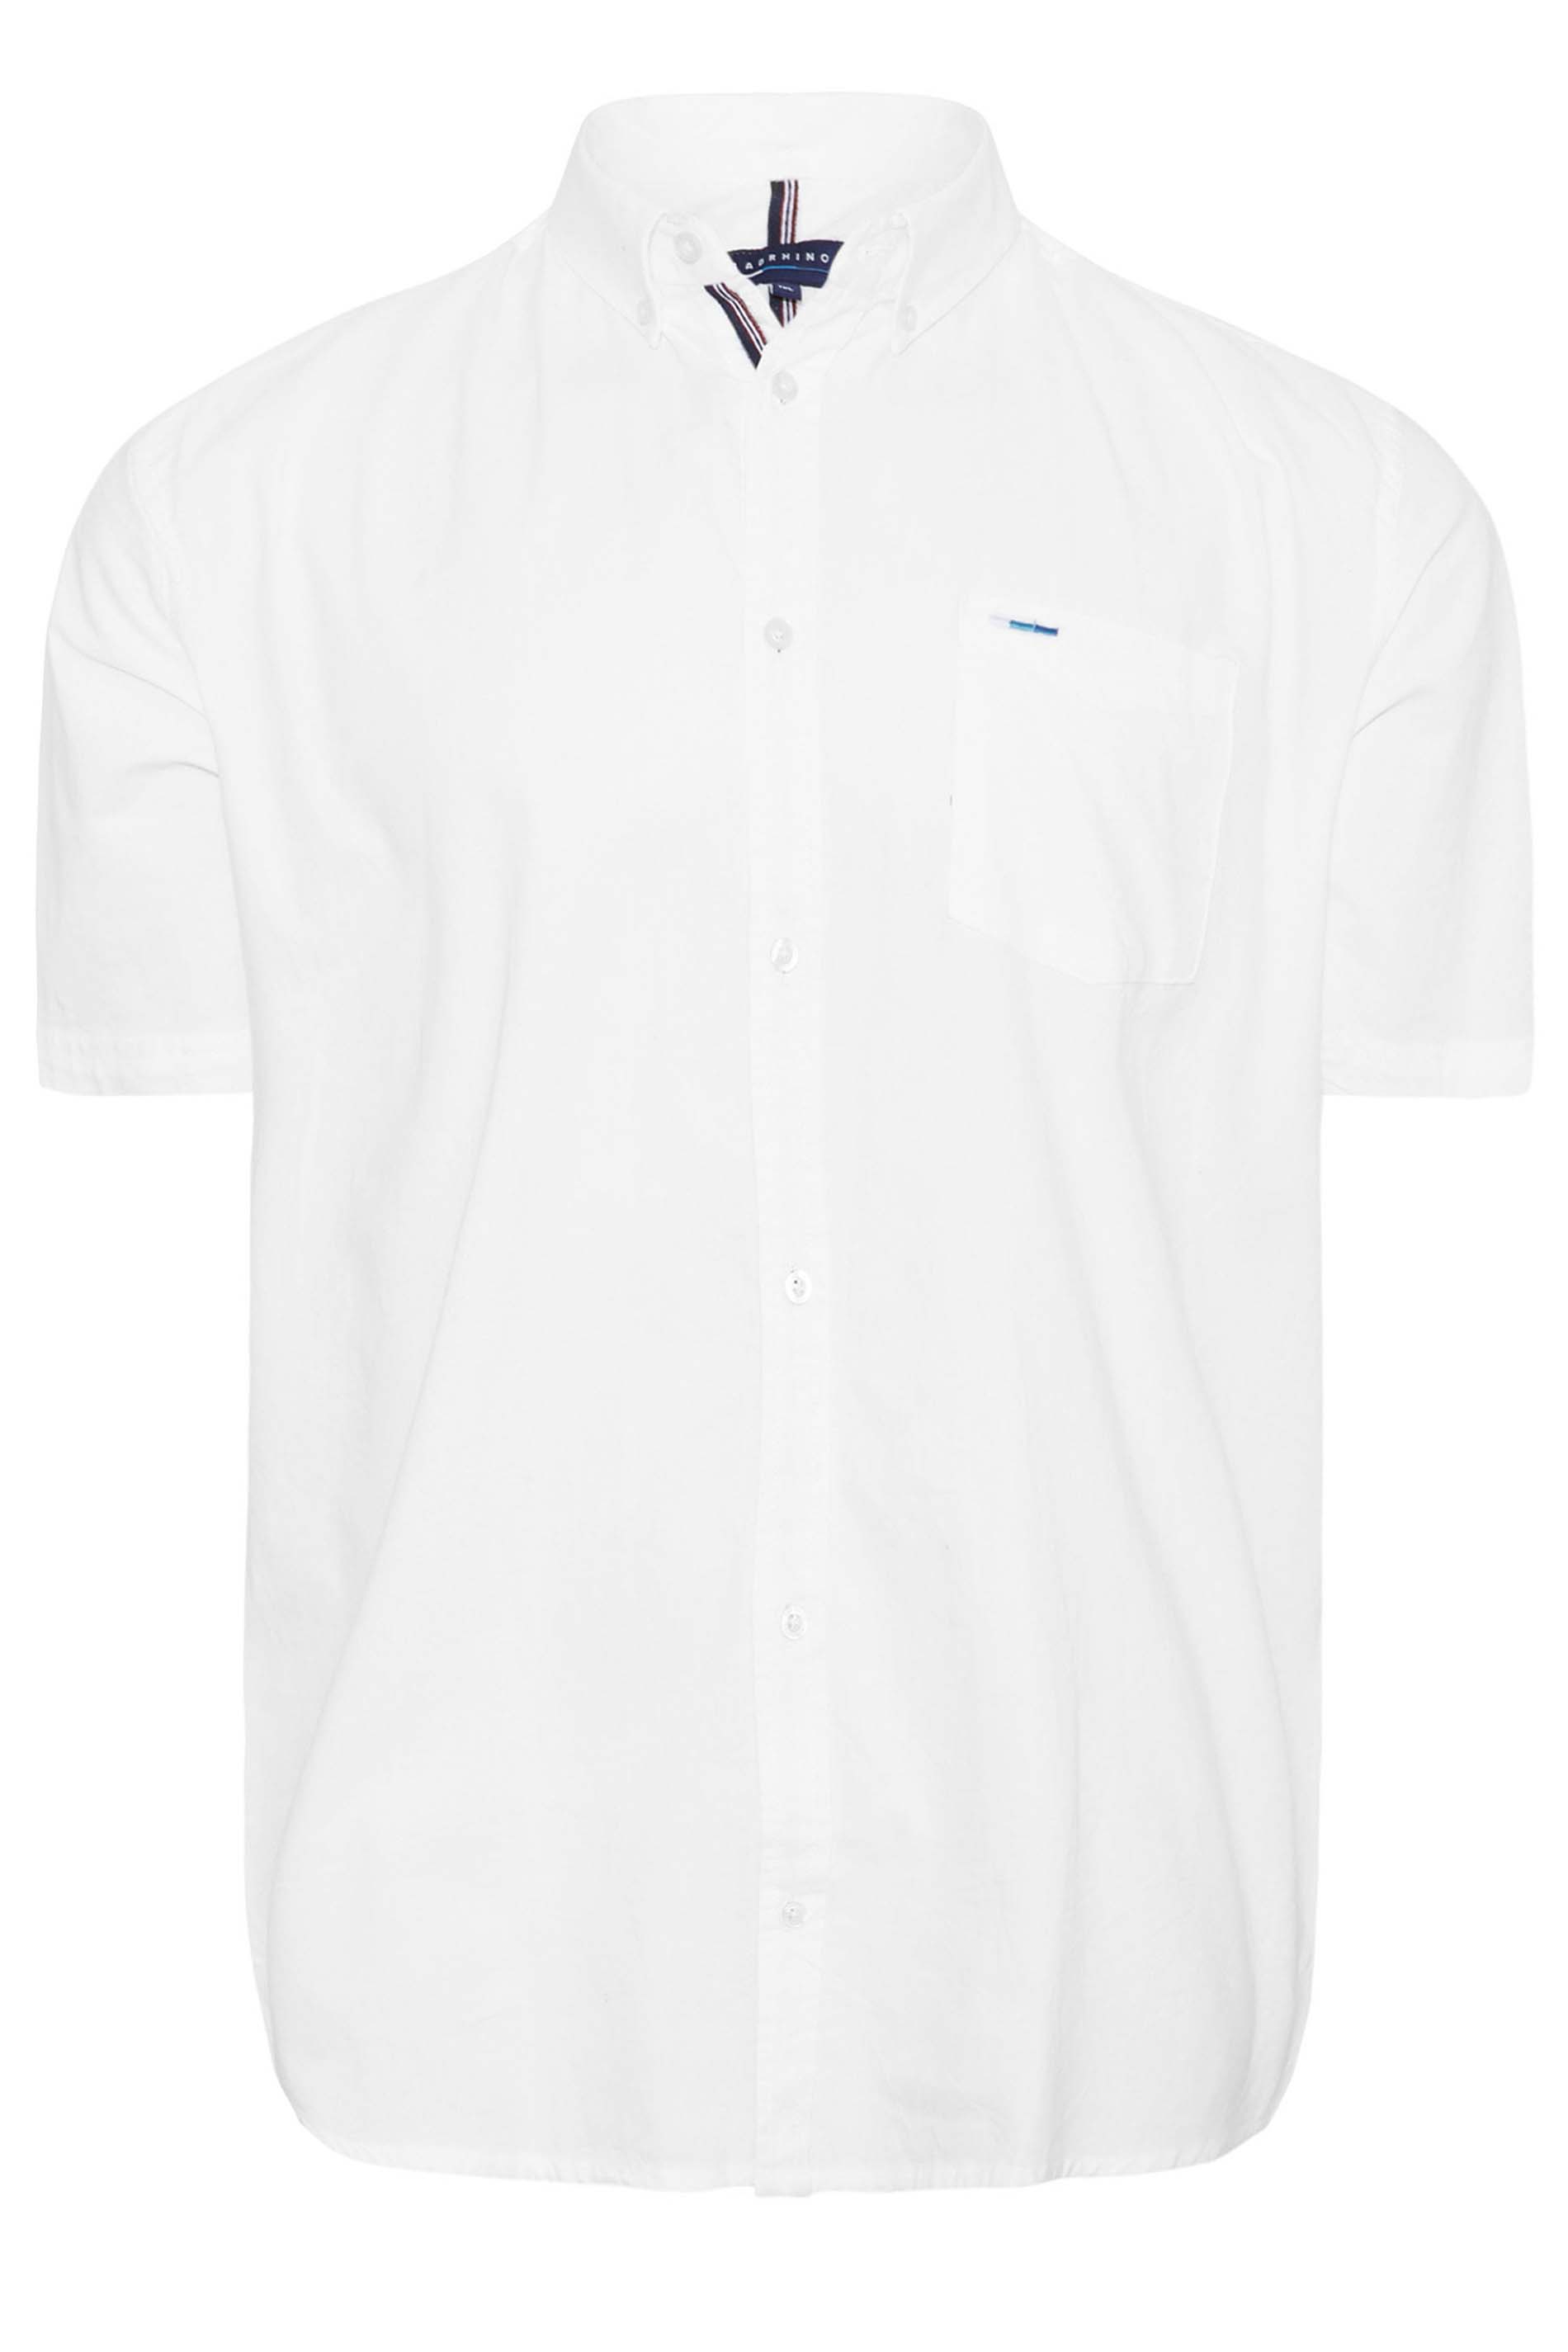 BadRhino White Essential Short Sleeve Oxford Shirt | BadRhino 3